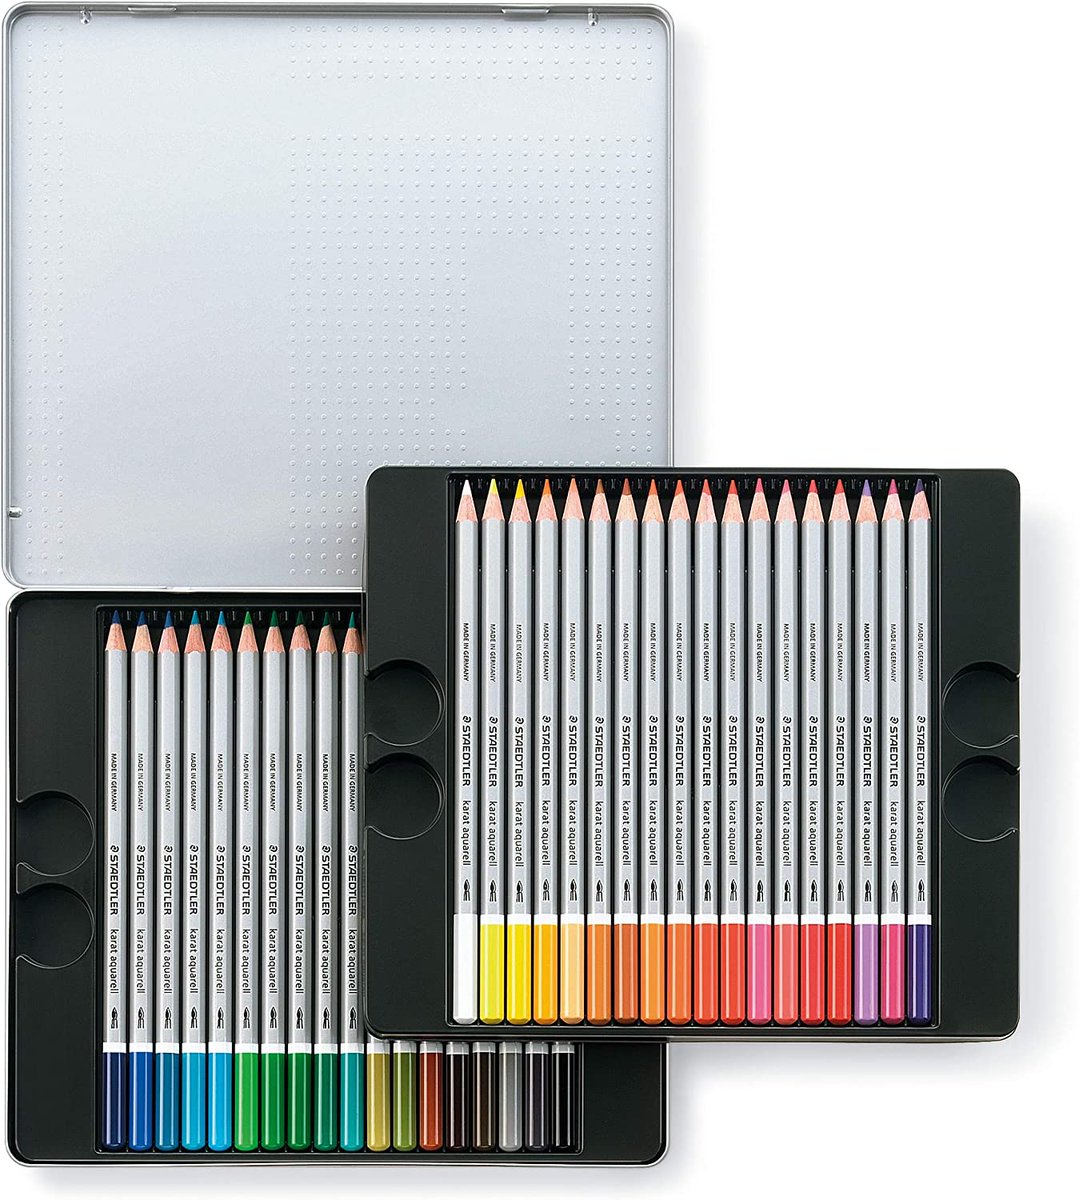 Staedtler: 36 Karat Aquarell Watercolour Pencils